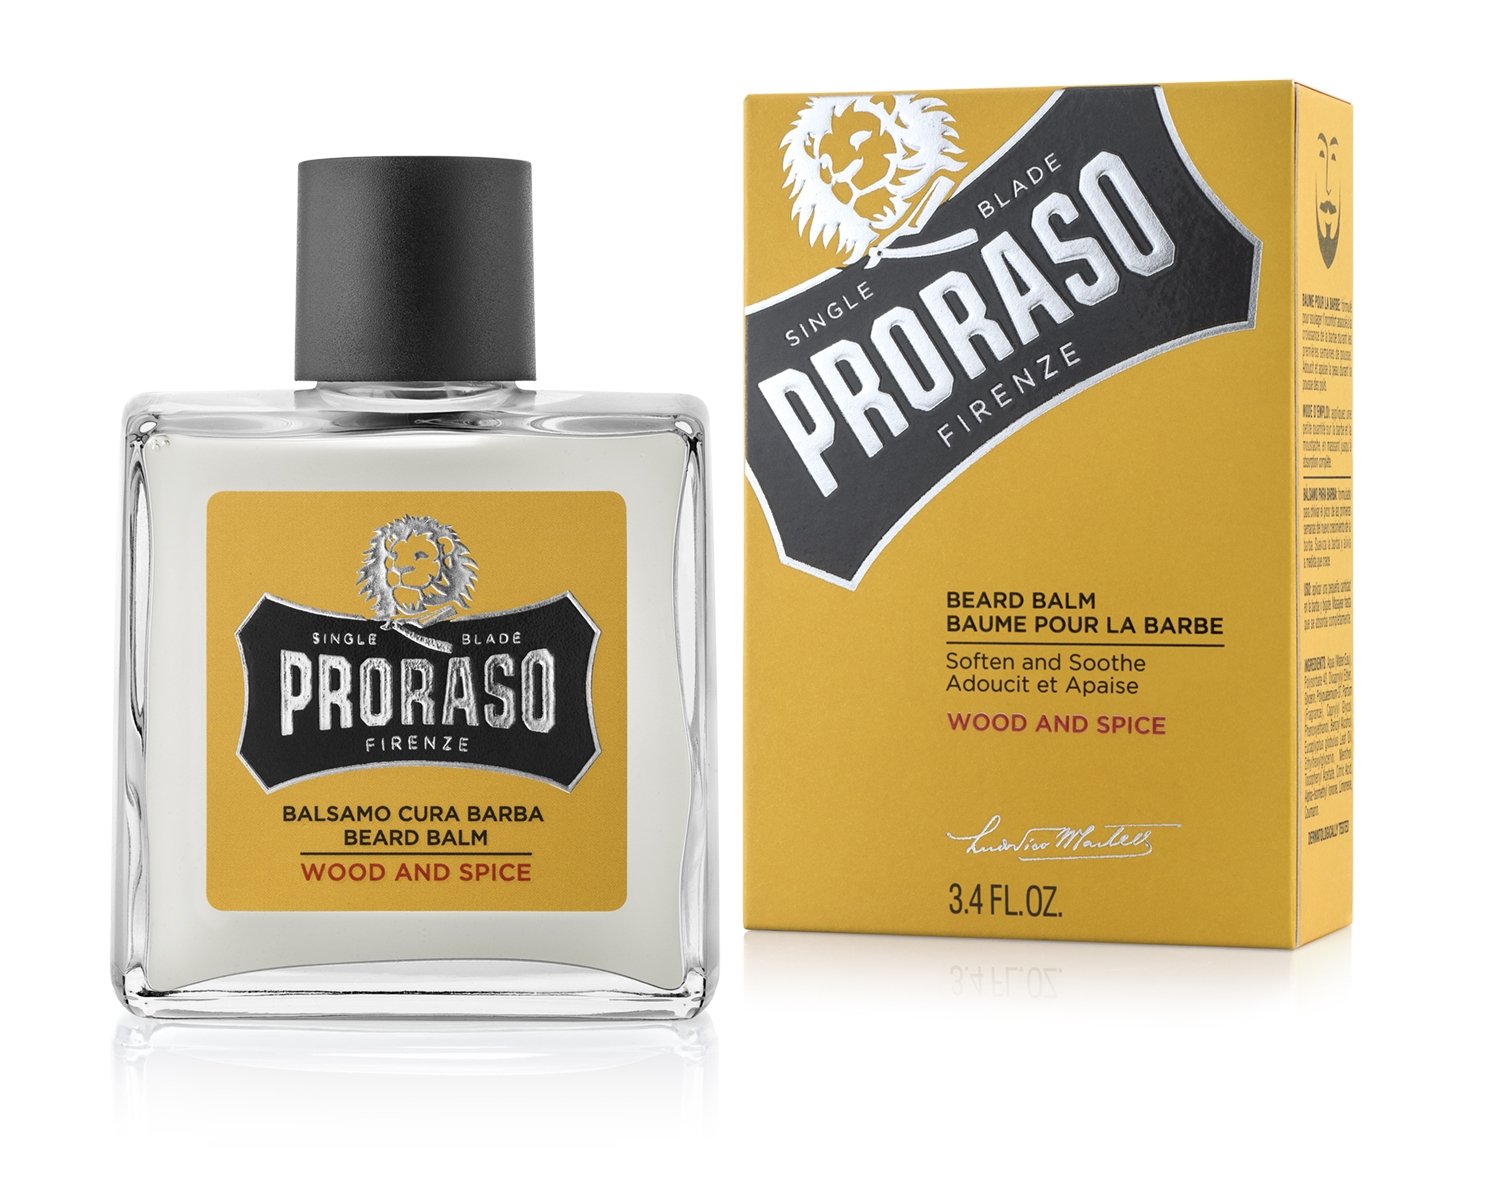 proraso-sk-gbalm-wood-spice-100-ml-2c7b9.jpg